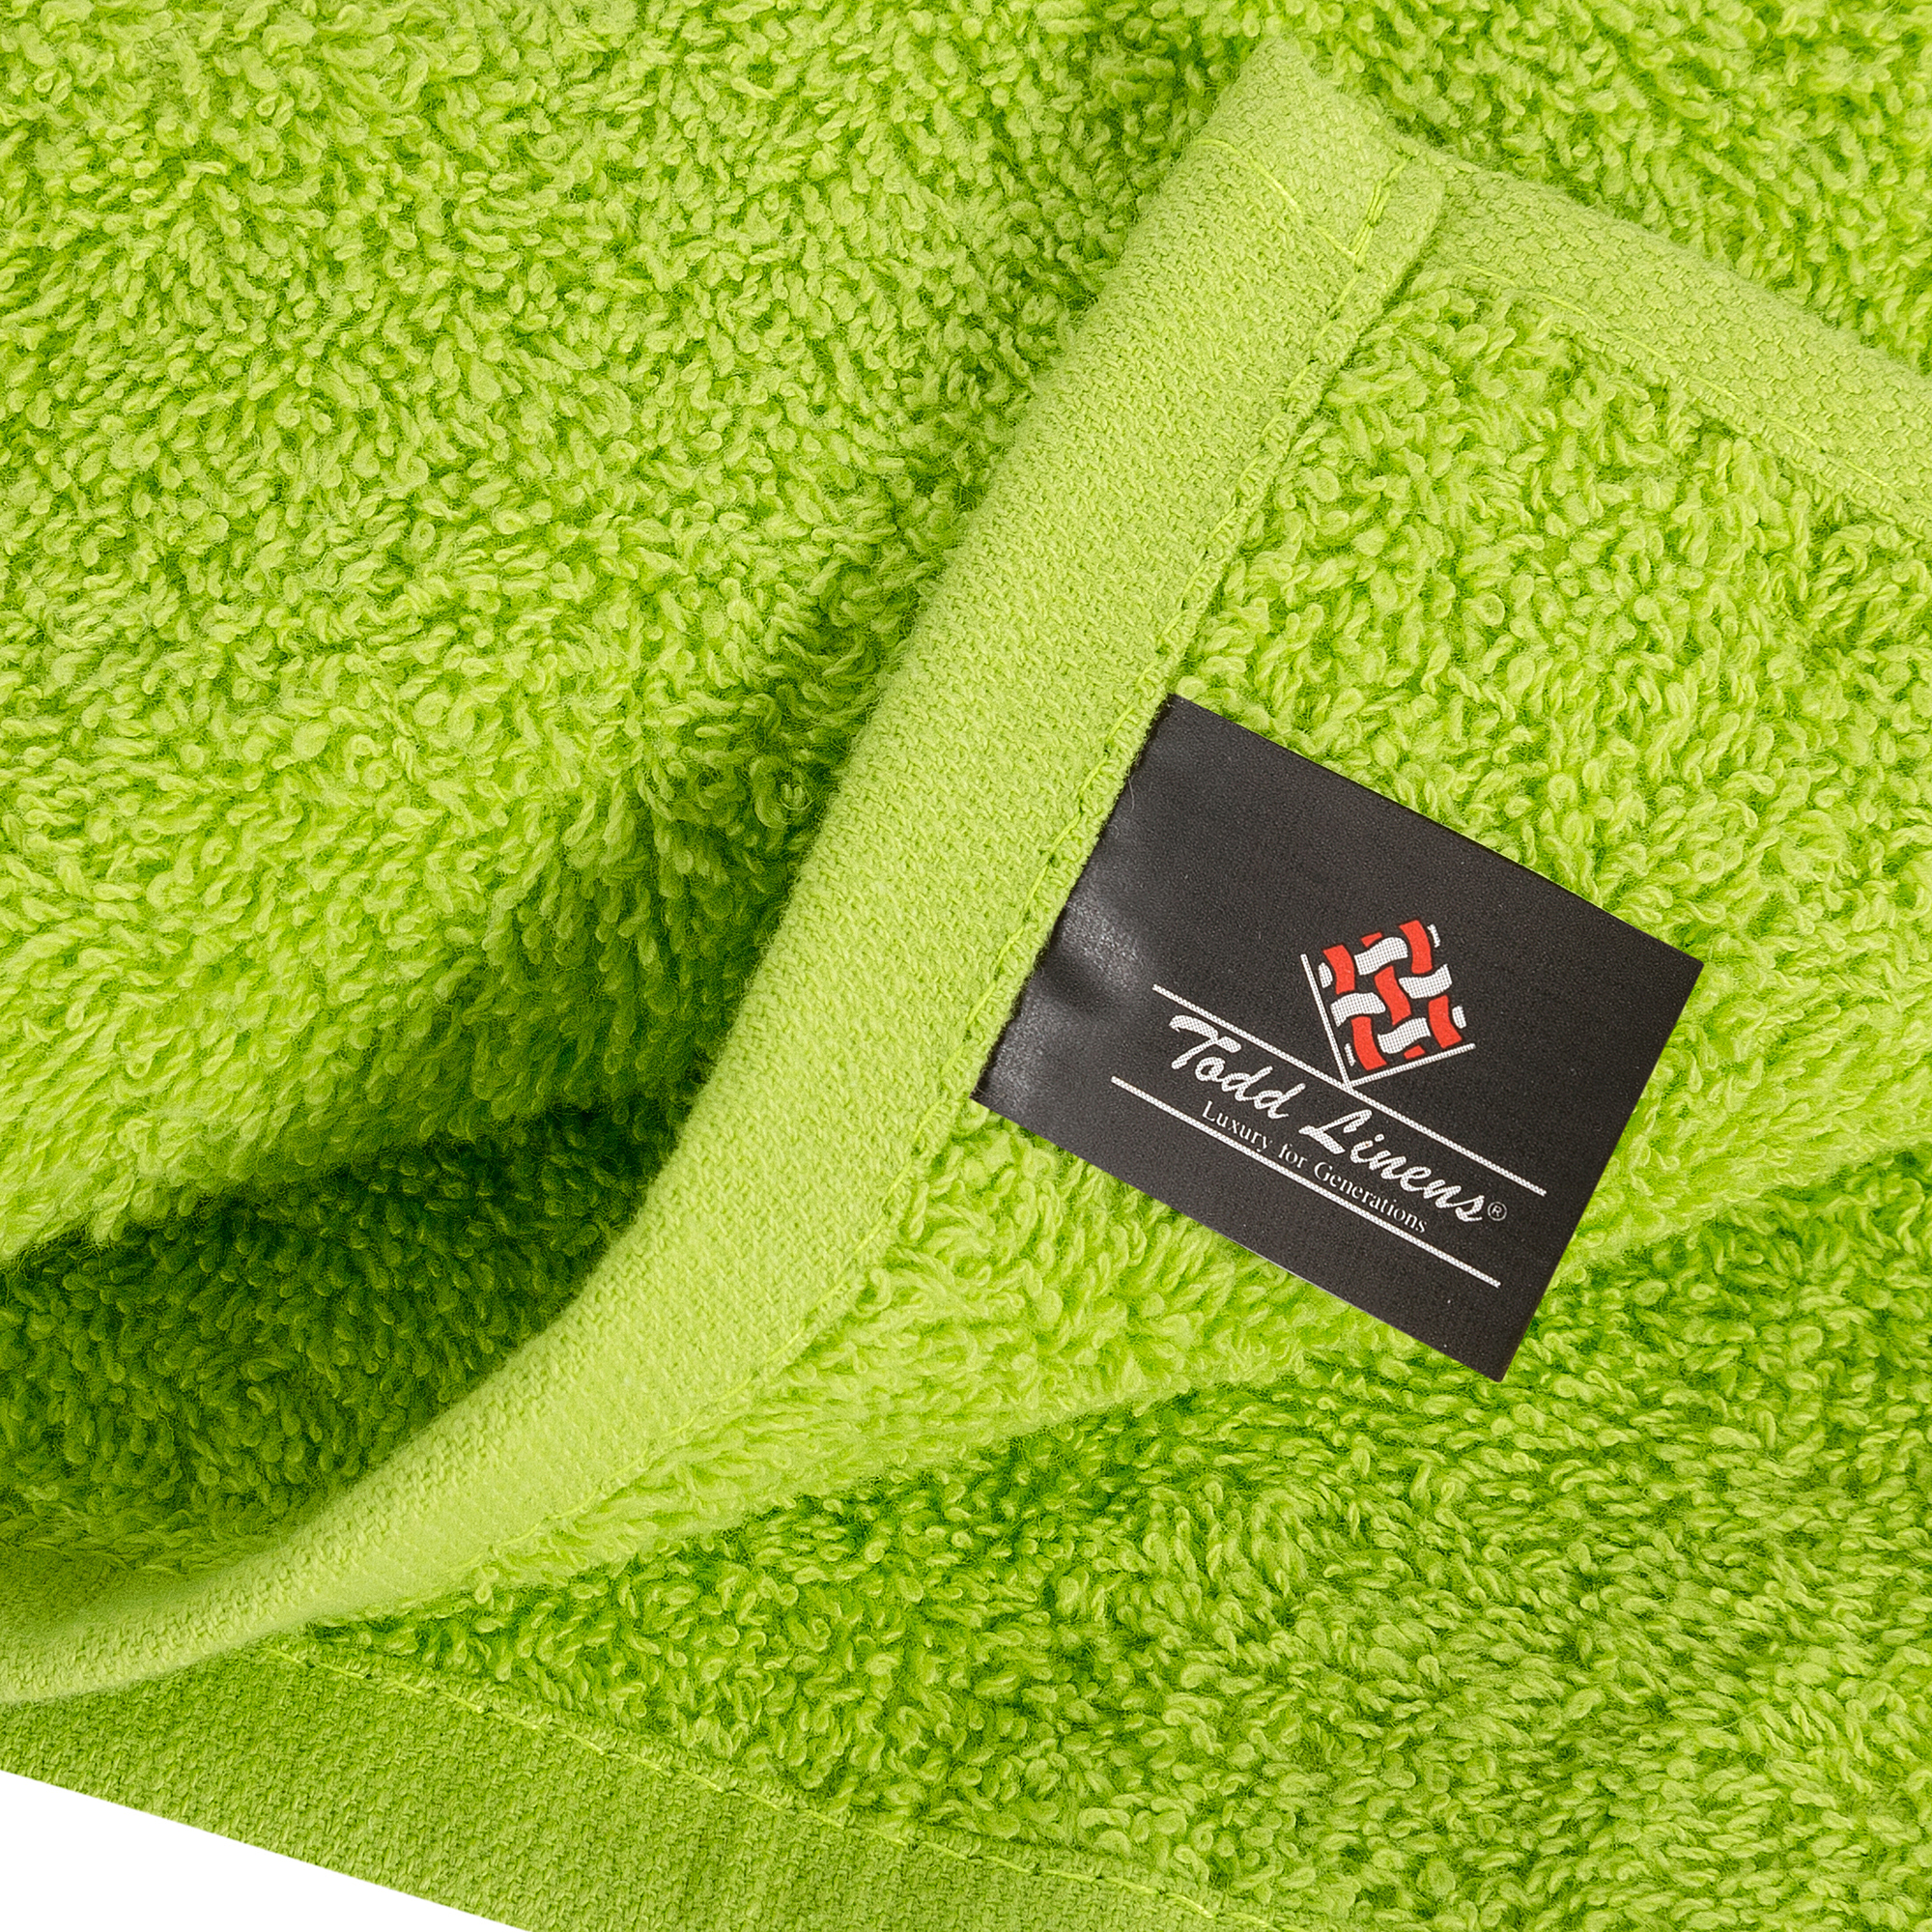 Bale Set 24pcs Lime Green Plain Face Towel